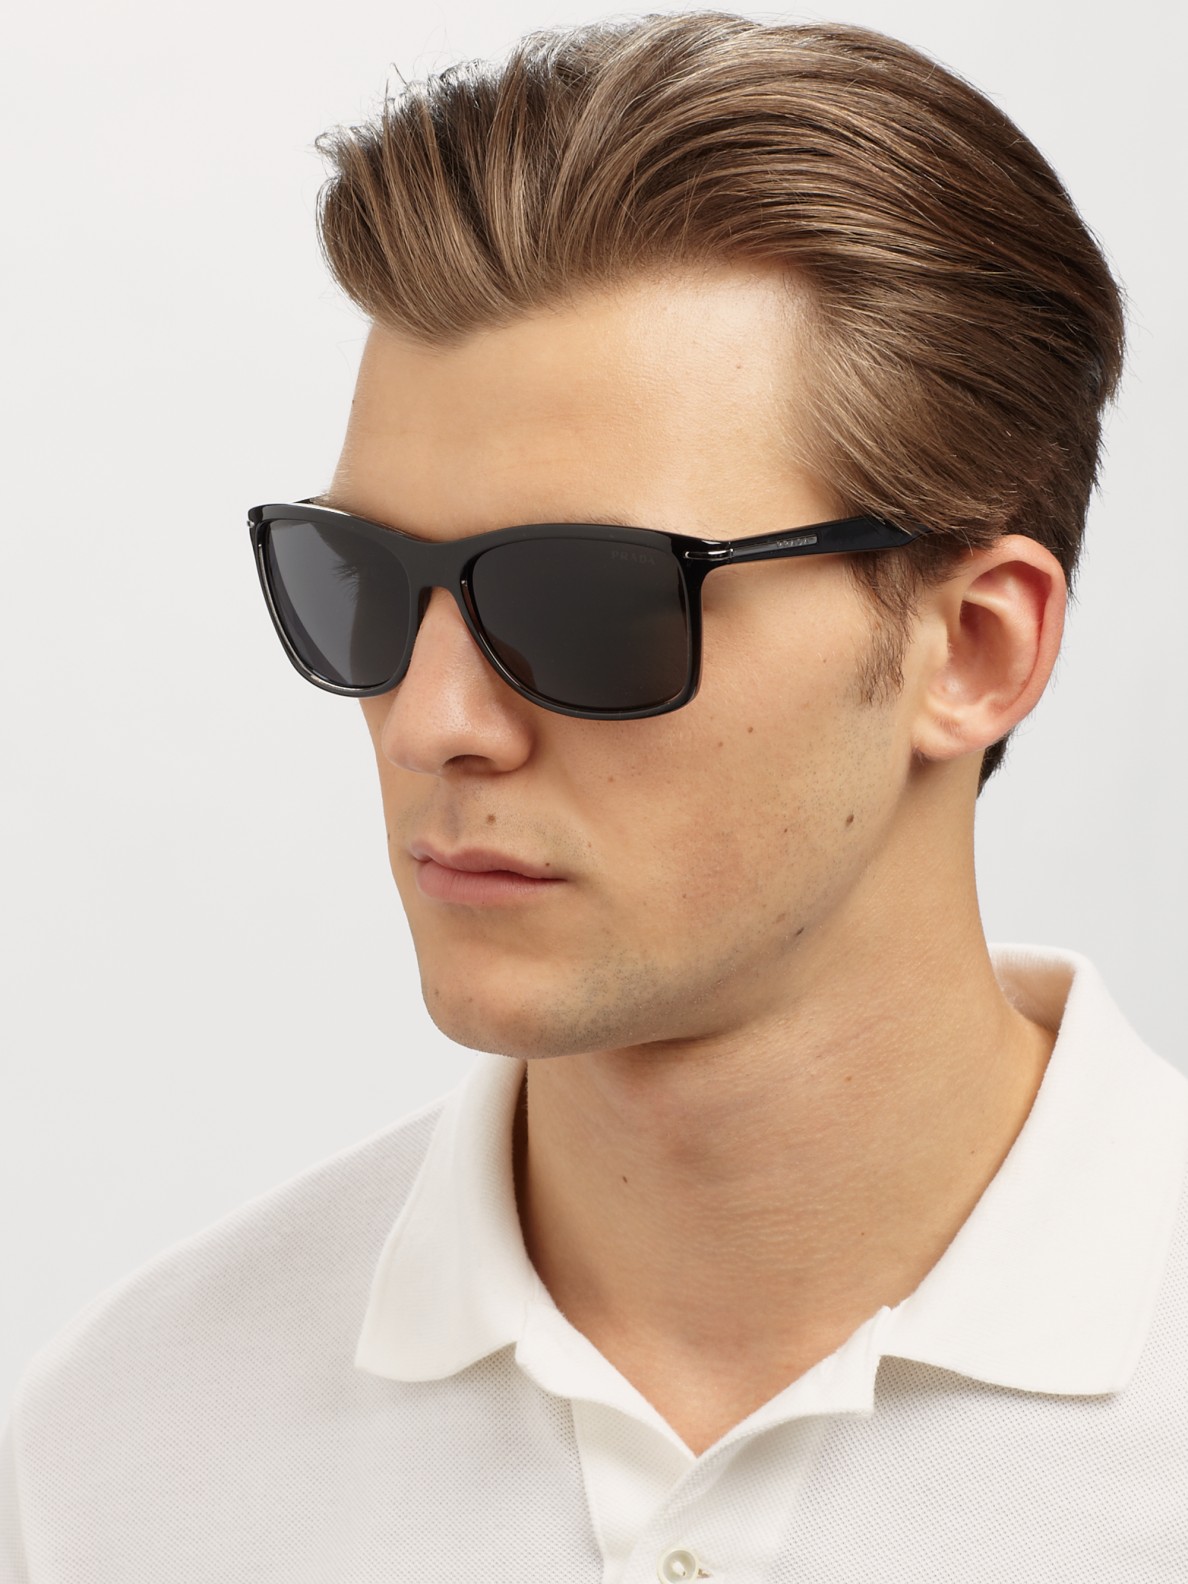 Prada Arrow Wayfarer Sunglasses in Black for Men - Lyst